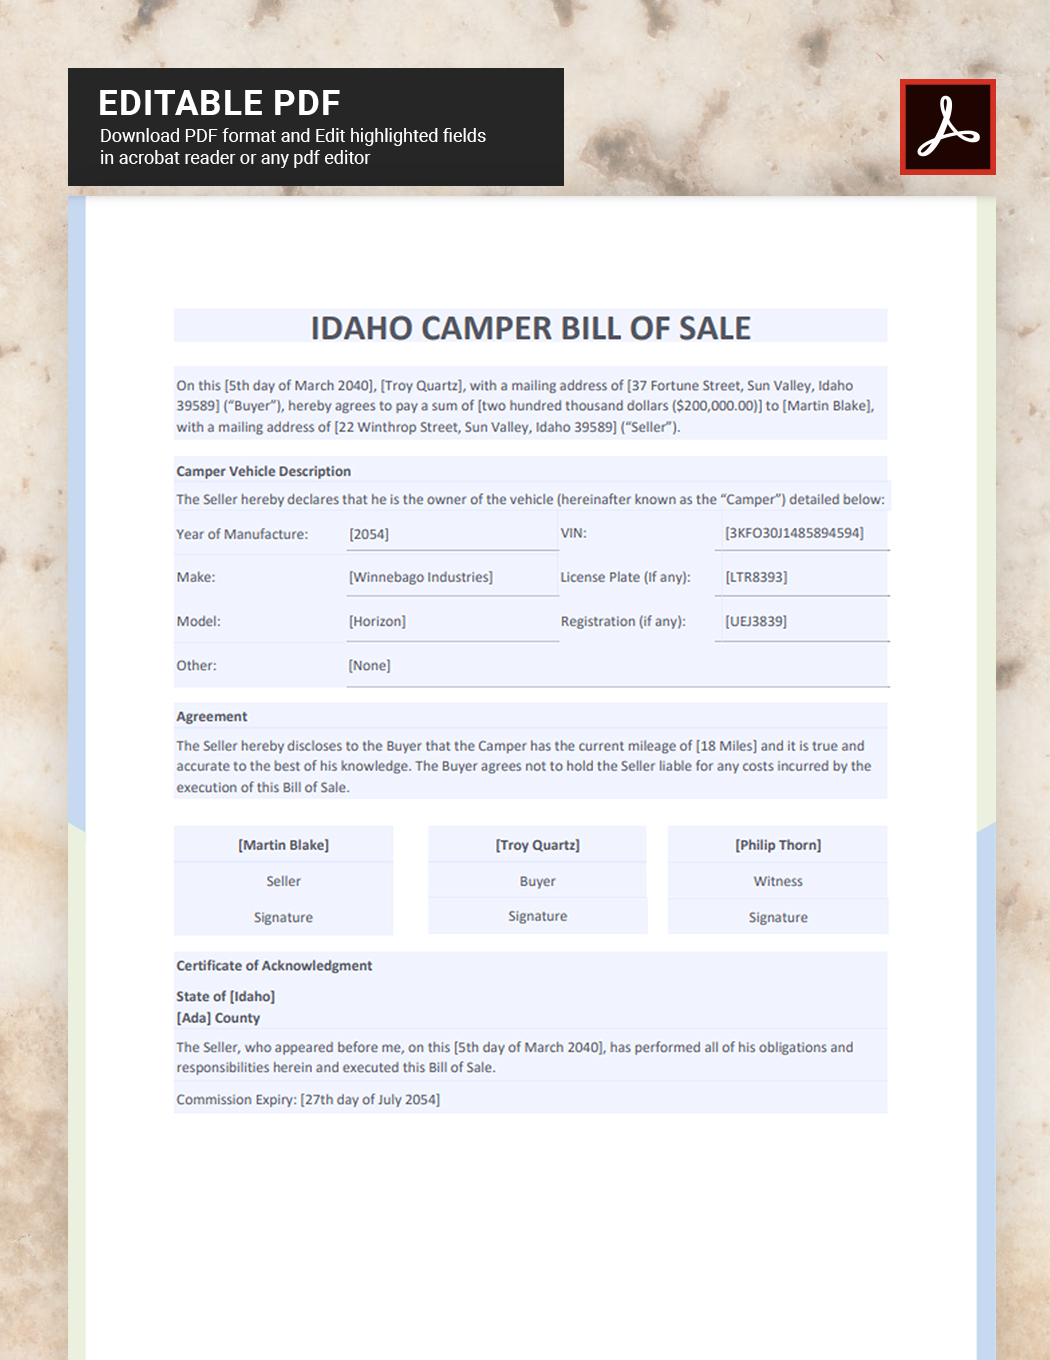 Idaho Camper Bill of Sale Template